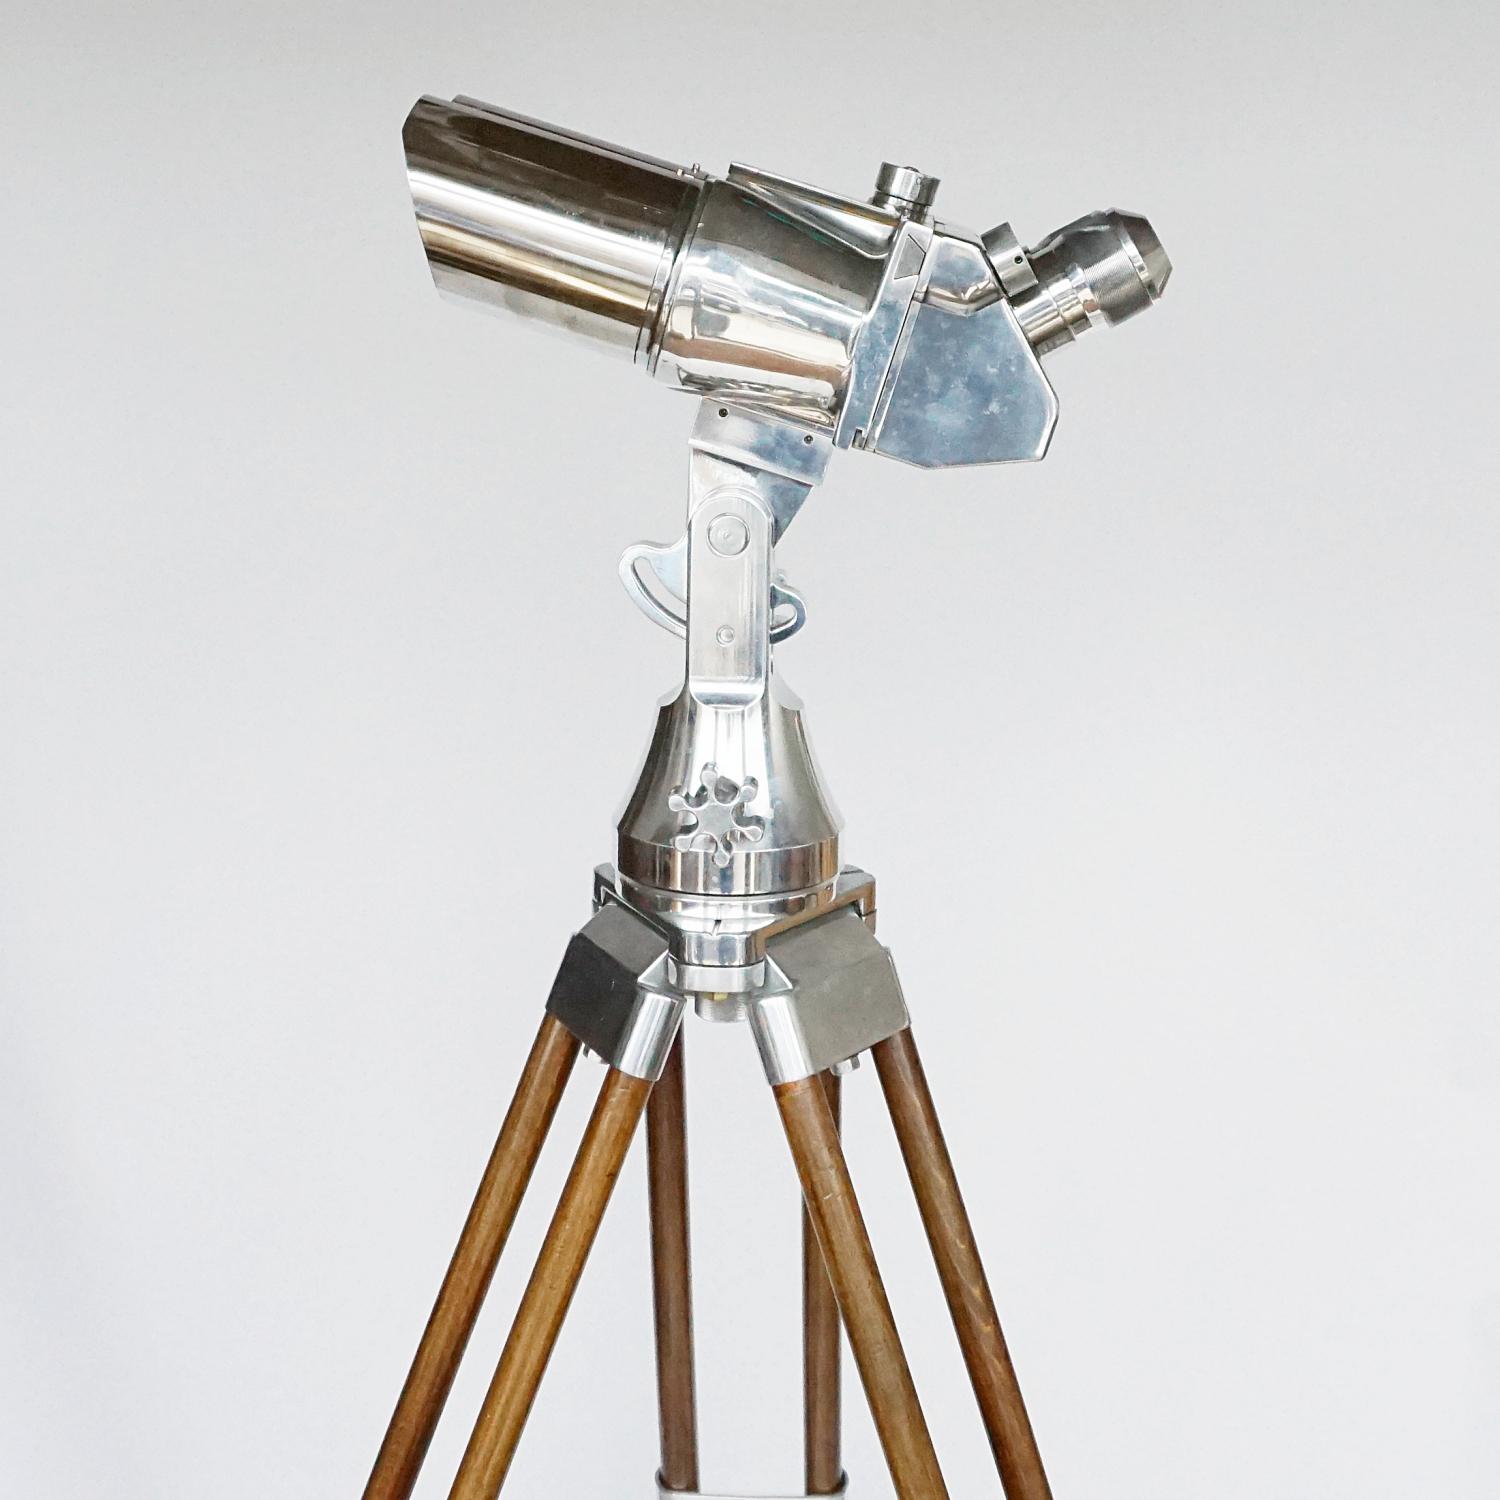 20th Century Pair of WW11 Observation Binoculars Designed by Emil Busch, circa 1940